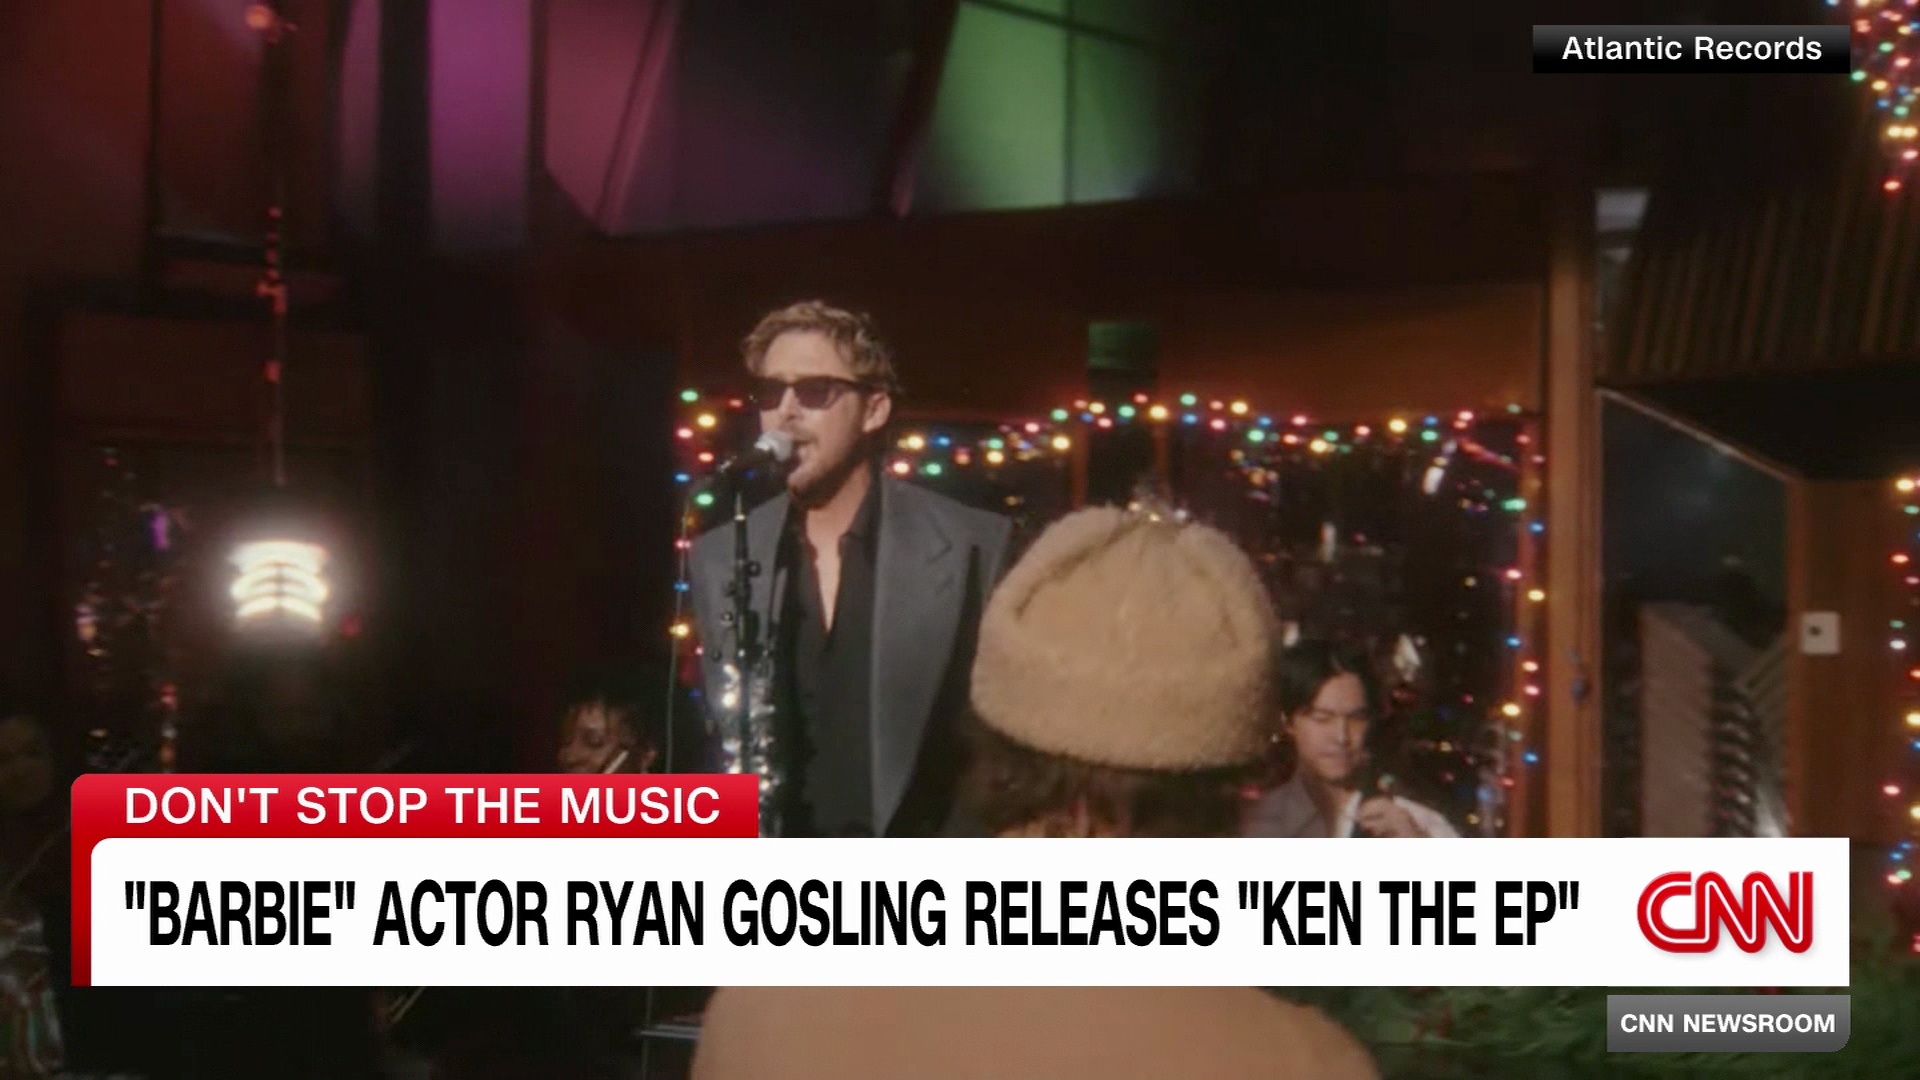 Ryan Gosling's 'Ken The EP' Includes 'I'm Just Ken' Christmas Version